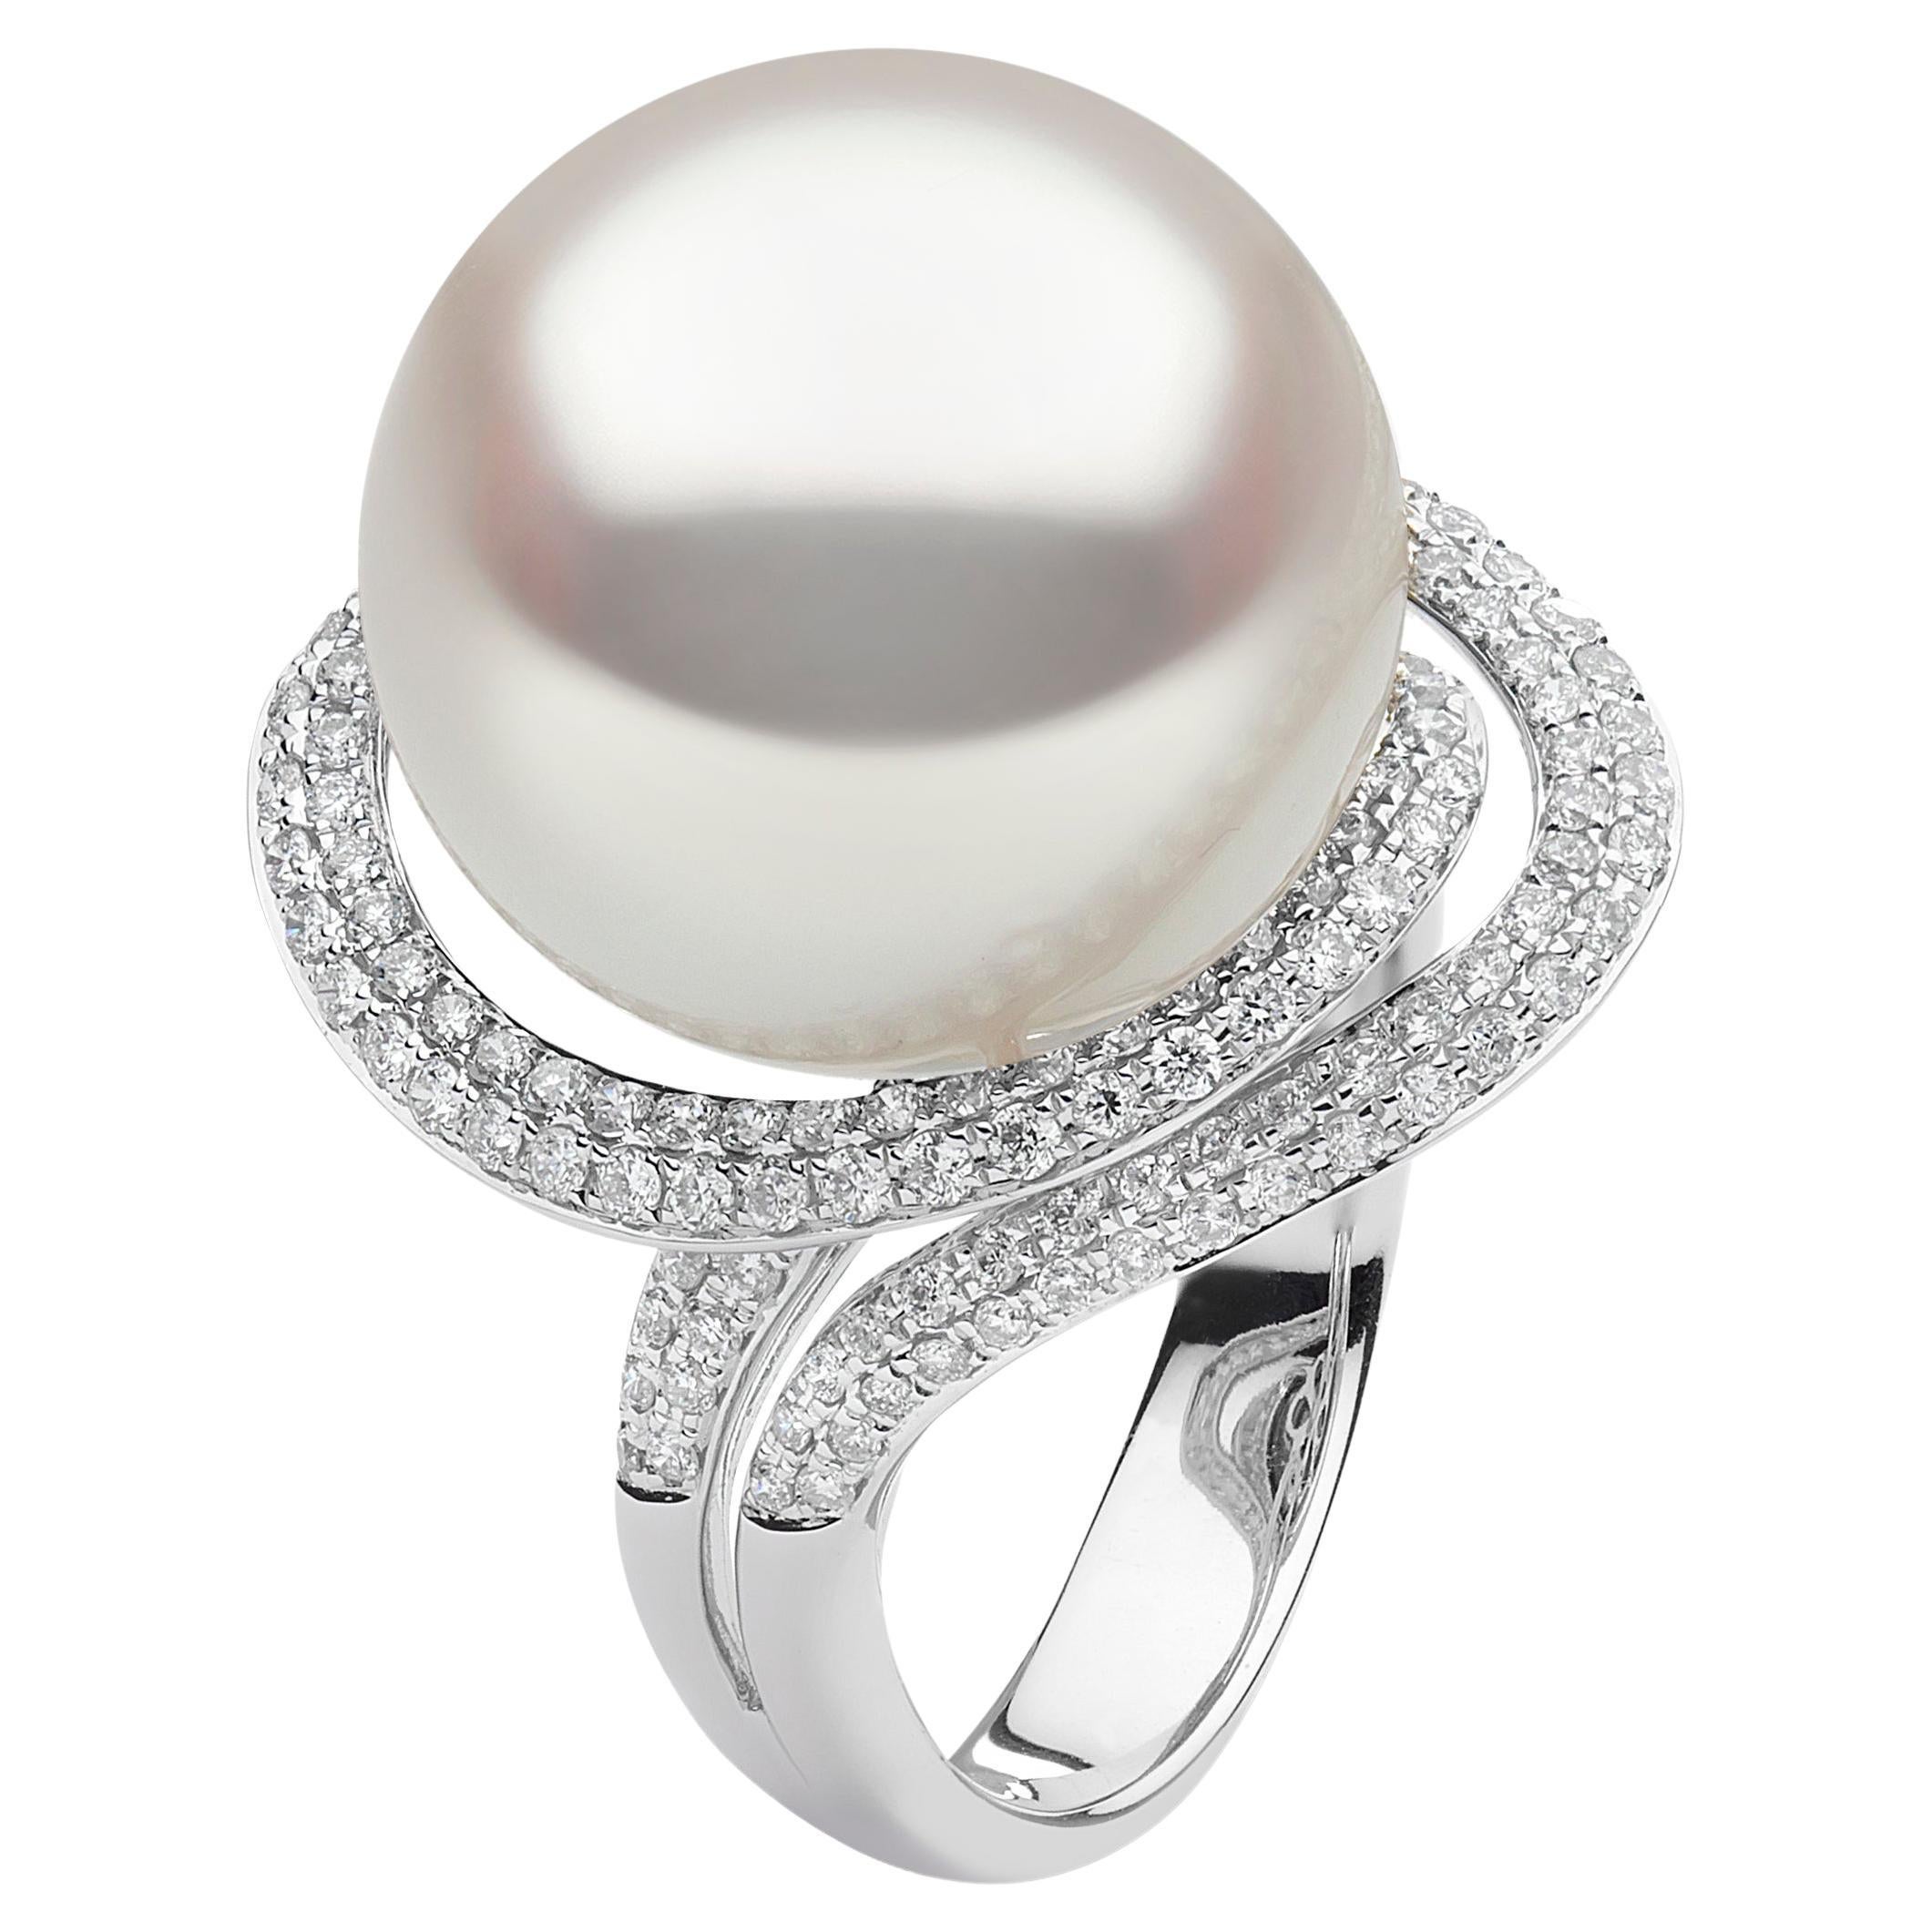 Yoko London South Sea Pearl and Diamond Ring in 18K White Gold